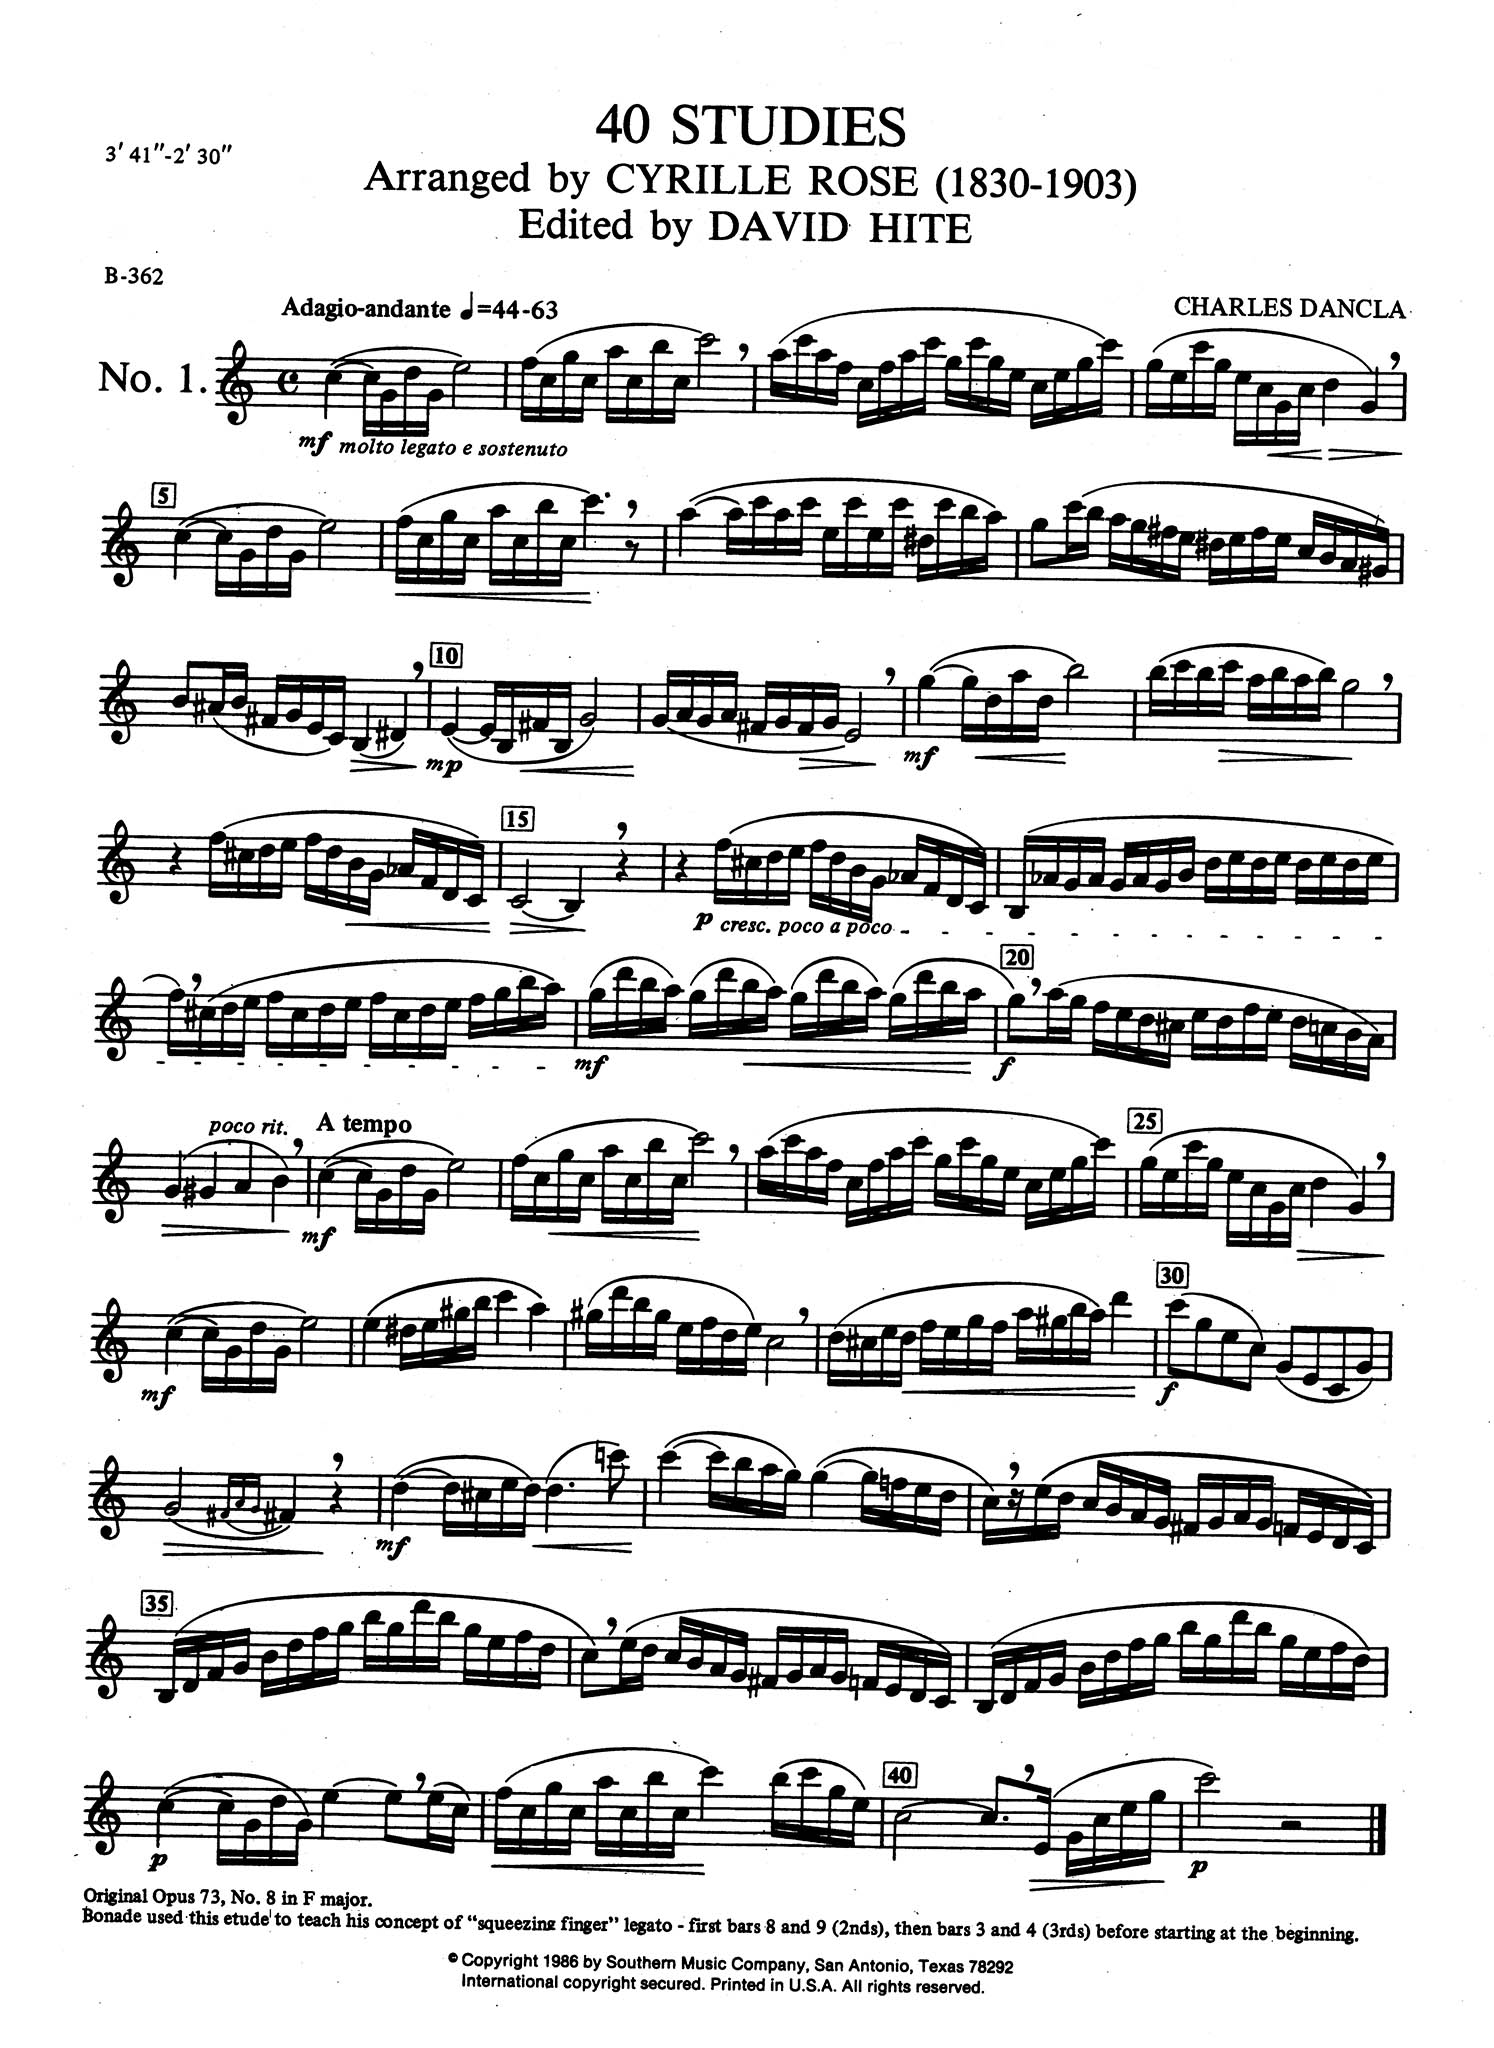 Méthode de piano Vol.1 (French Edition): SCHMOLL A.: 9790230303002:  : Books